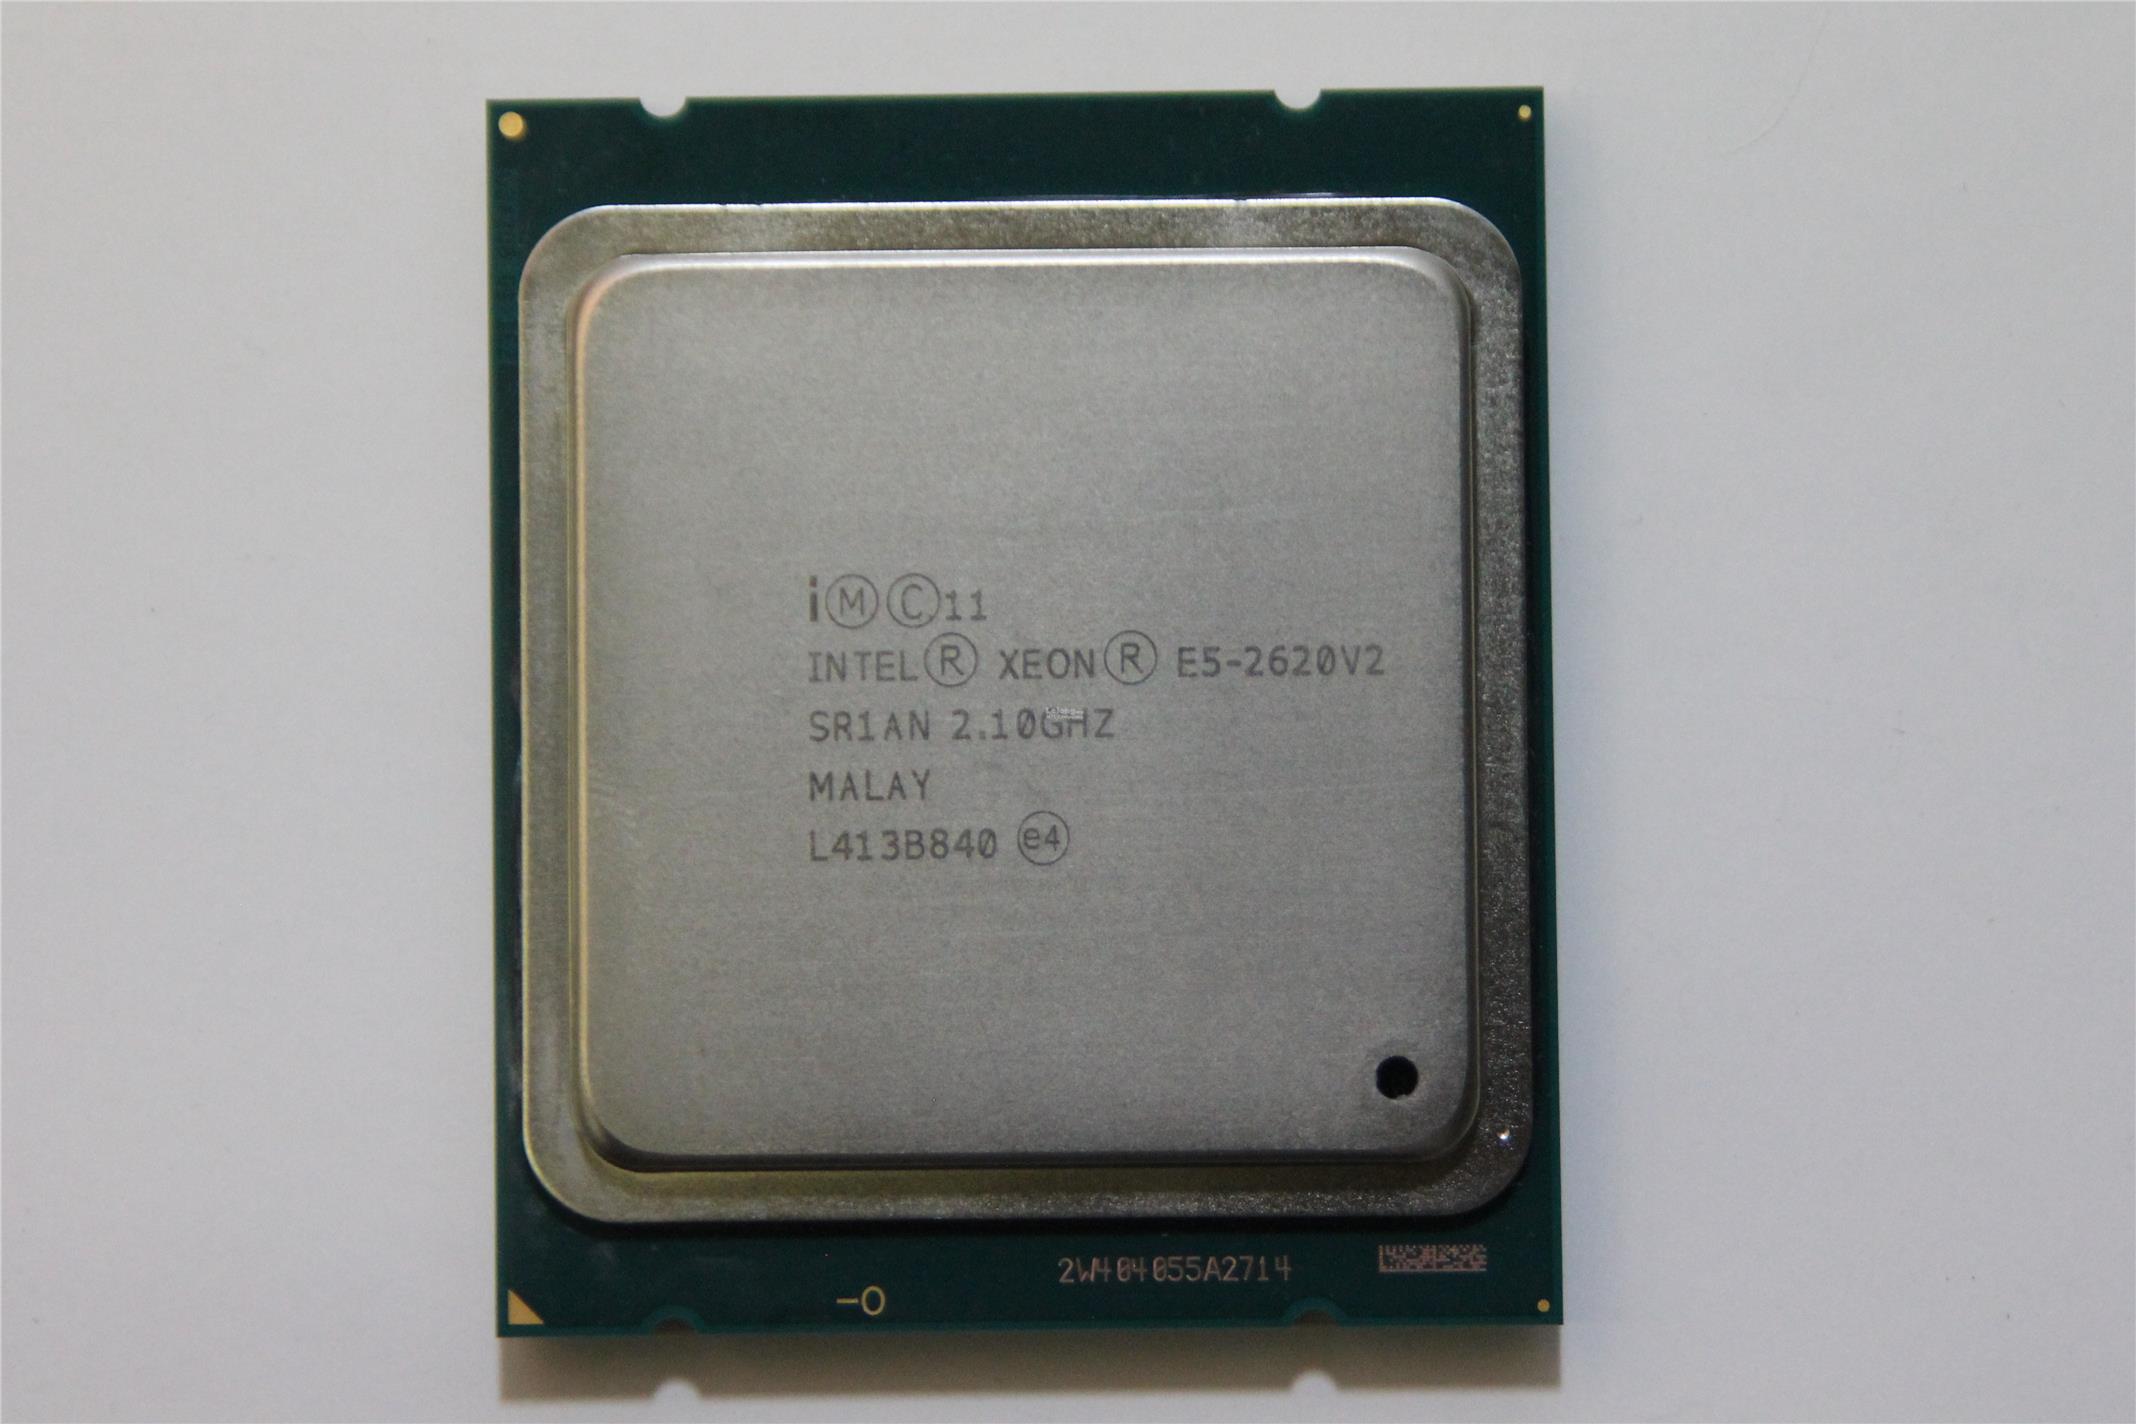 Intel Xeon Processor 6C E5-2620 v2 (15M Cache, 2.1GHz,LGA2011) (SR1AN)